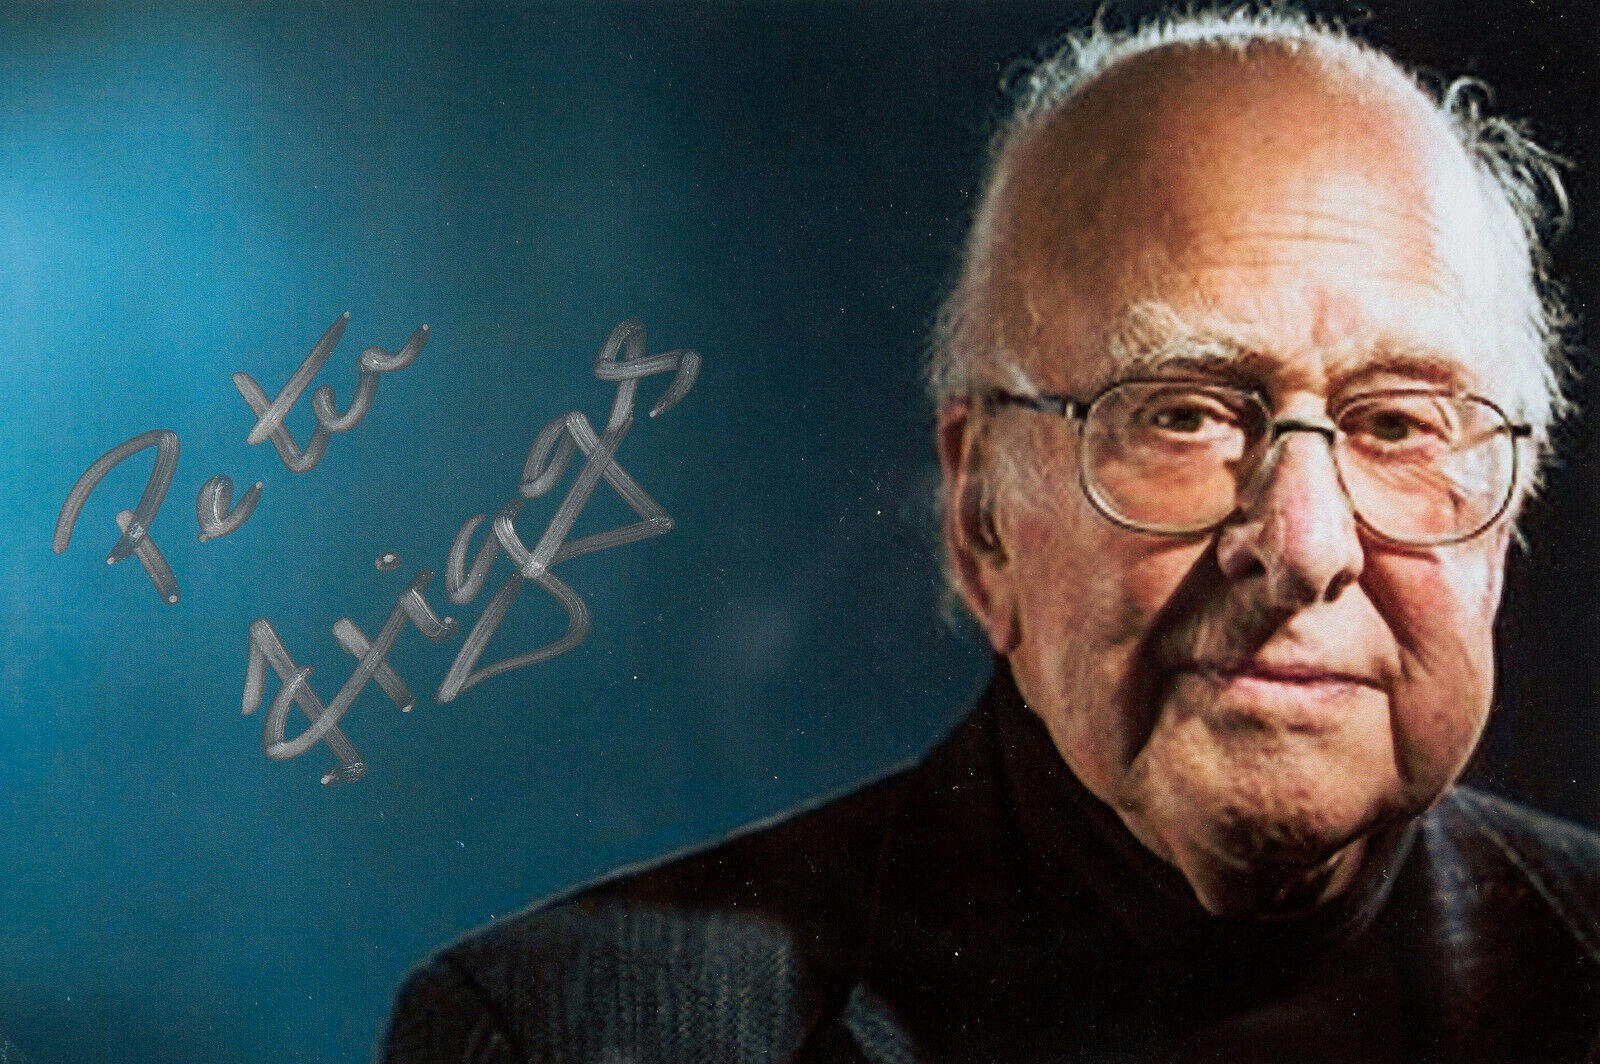 PETER HIGGS Signed Photograph - Physicist / Nobel Winner Higgs boson - preprint